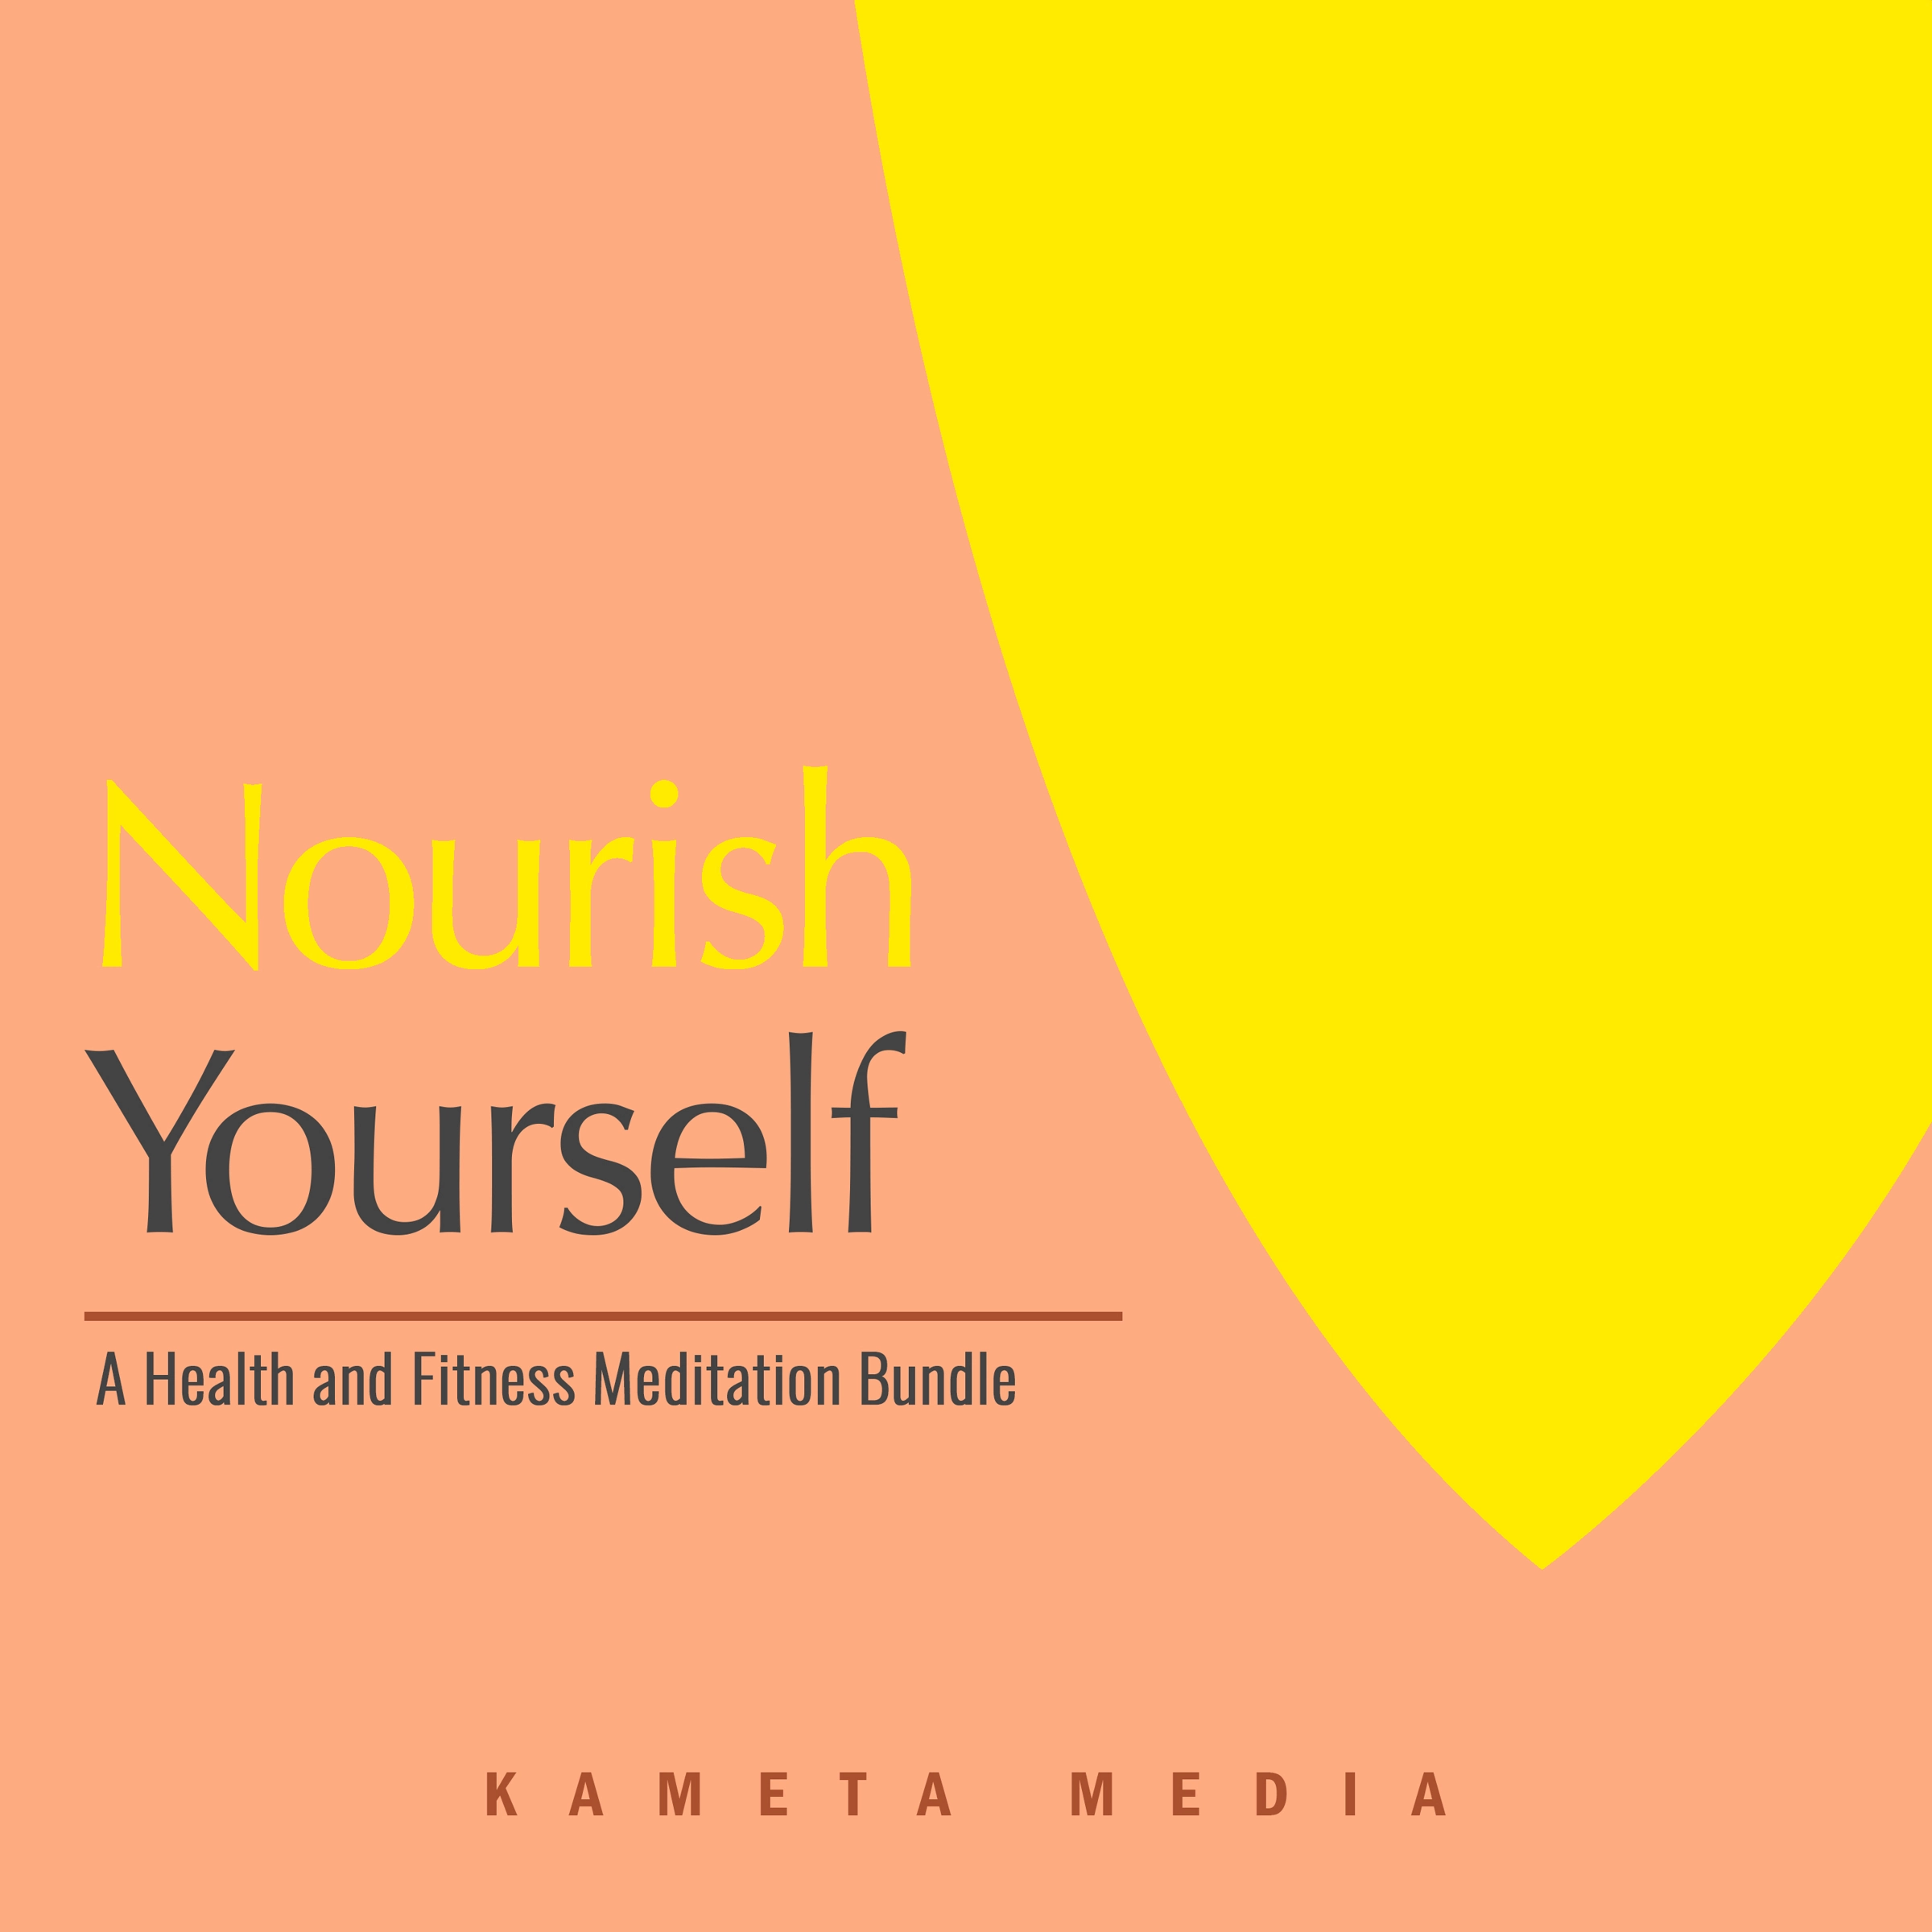 Nourish Yourself: A Health and Fitness Meditation Bundle Audiobook by Kameta Media